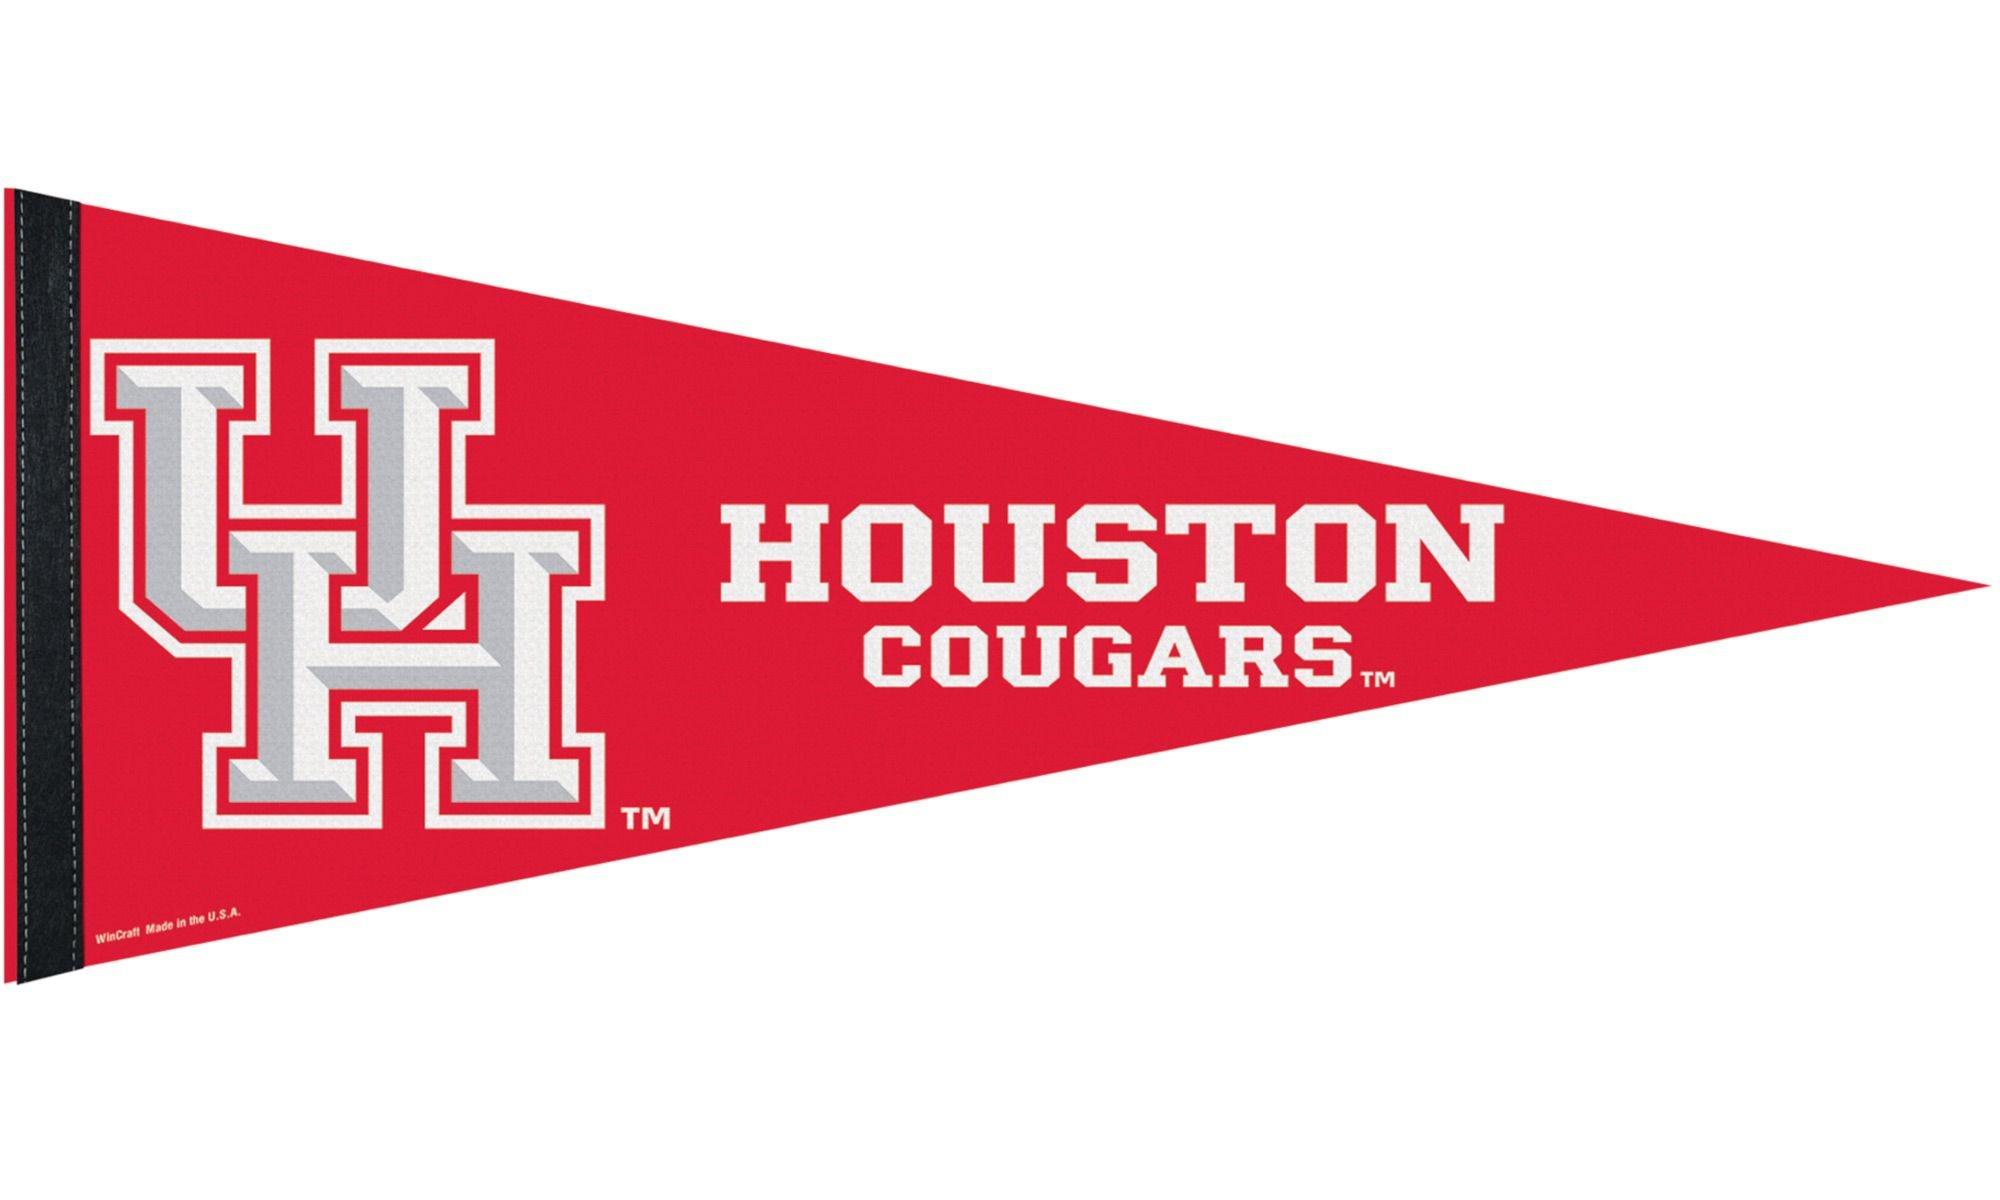 Houston Cougars Pennant Flag